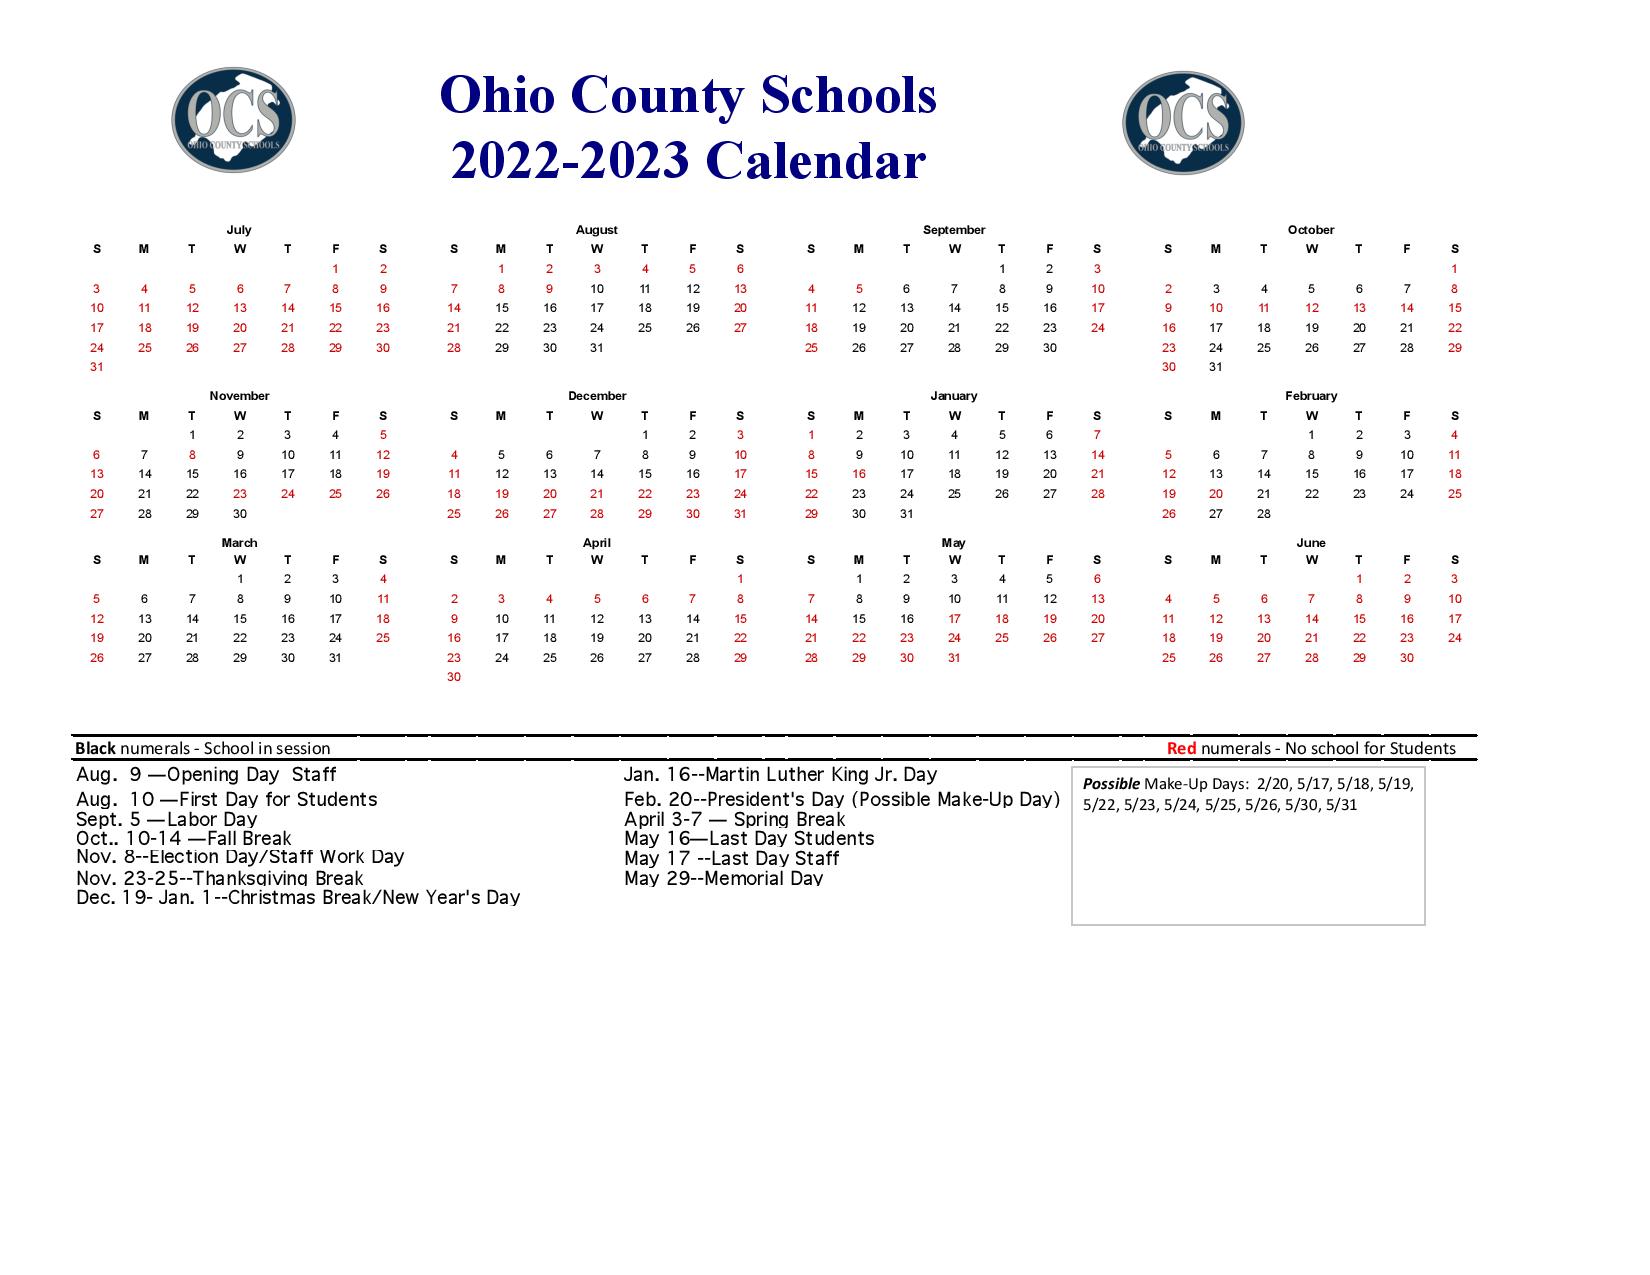 Ohio County Schools Calendar Holidays 20232024 PDF